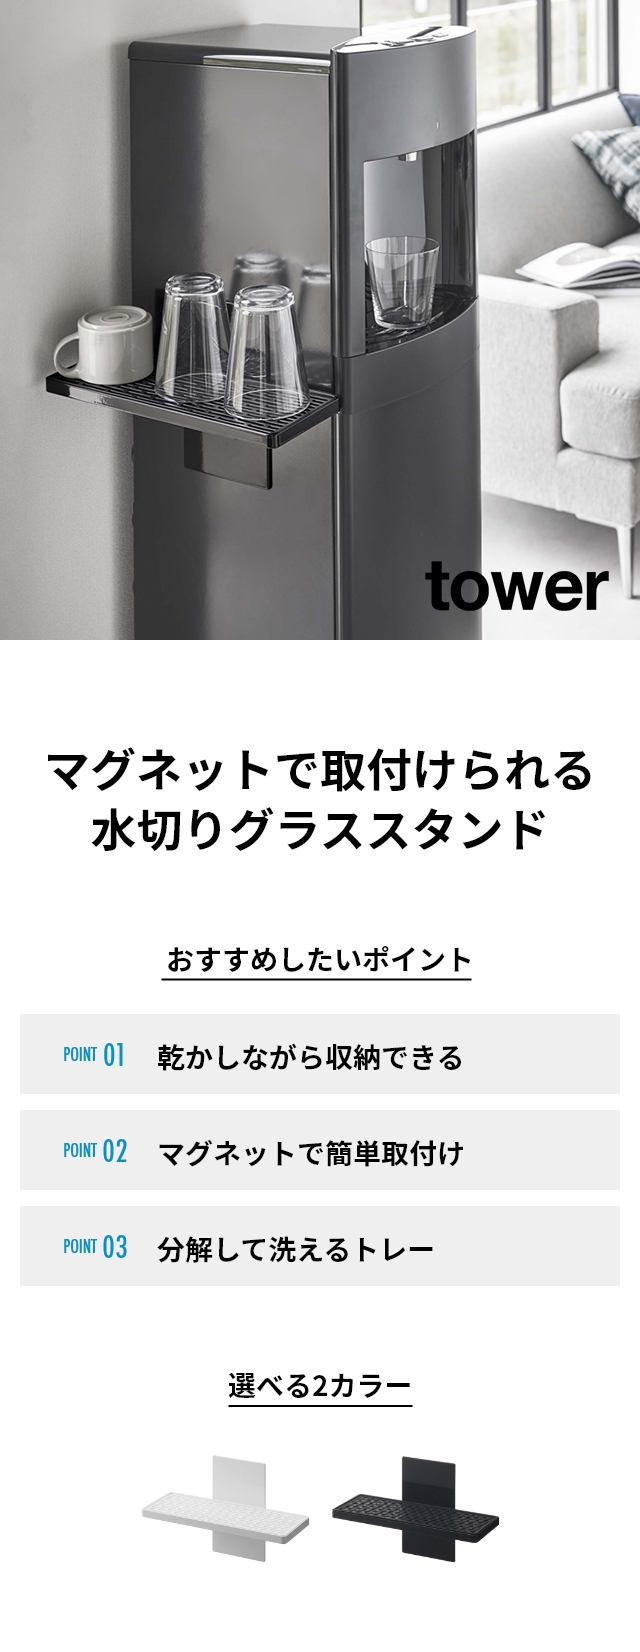 tower（タワー） ウォーターサーバー横マグネットカップディスペンサー タワー